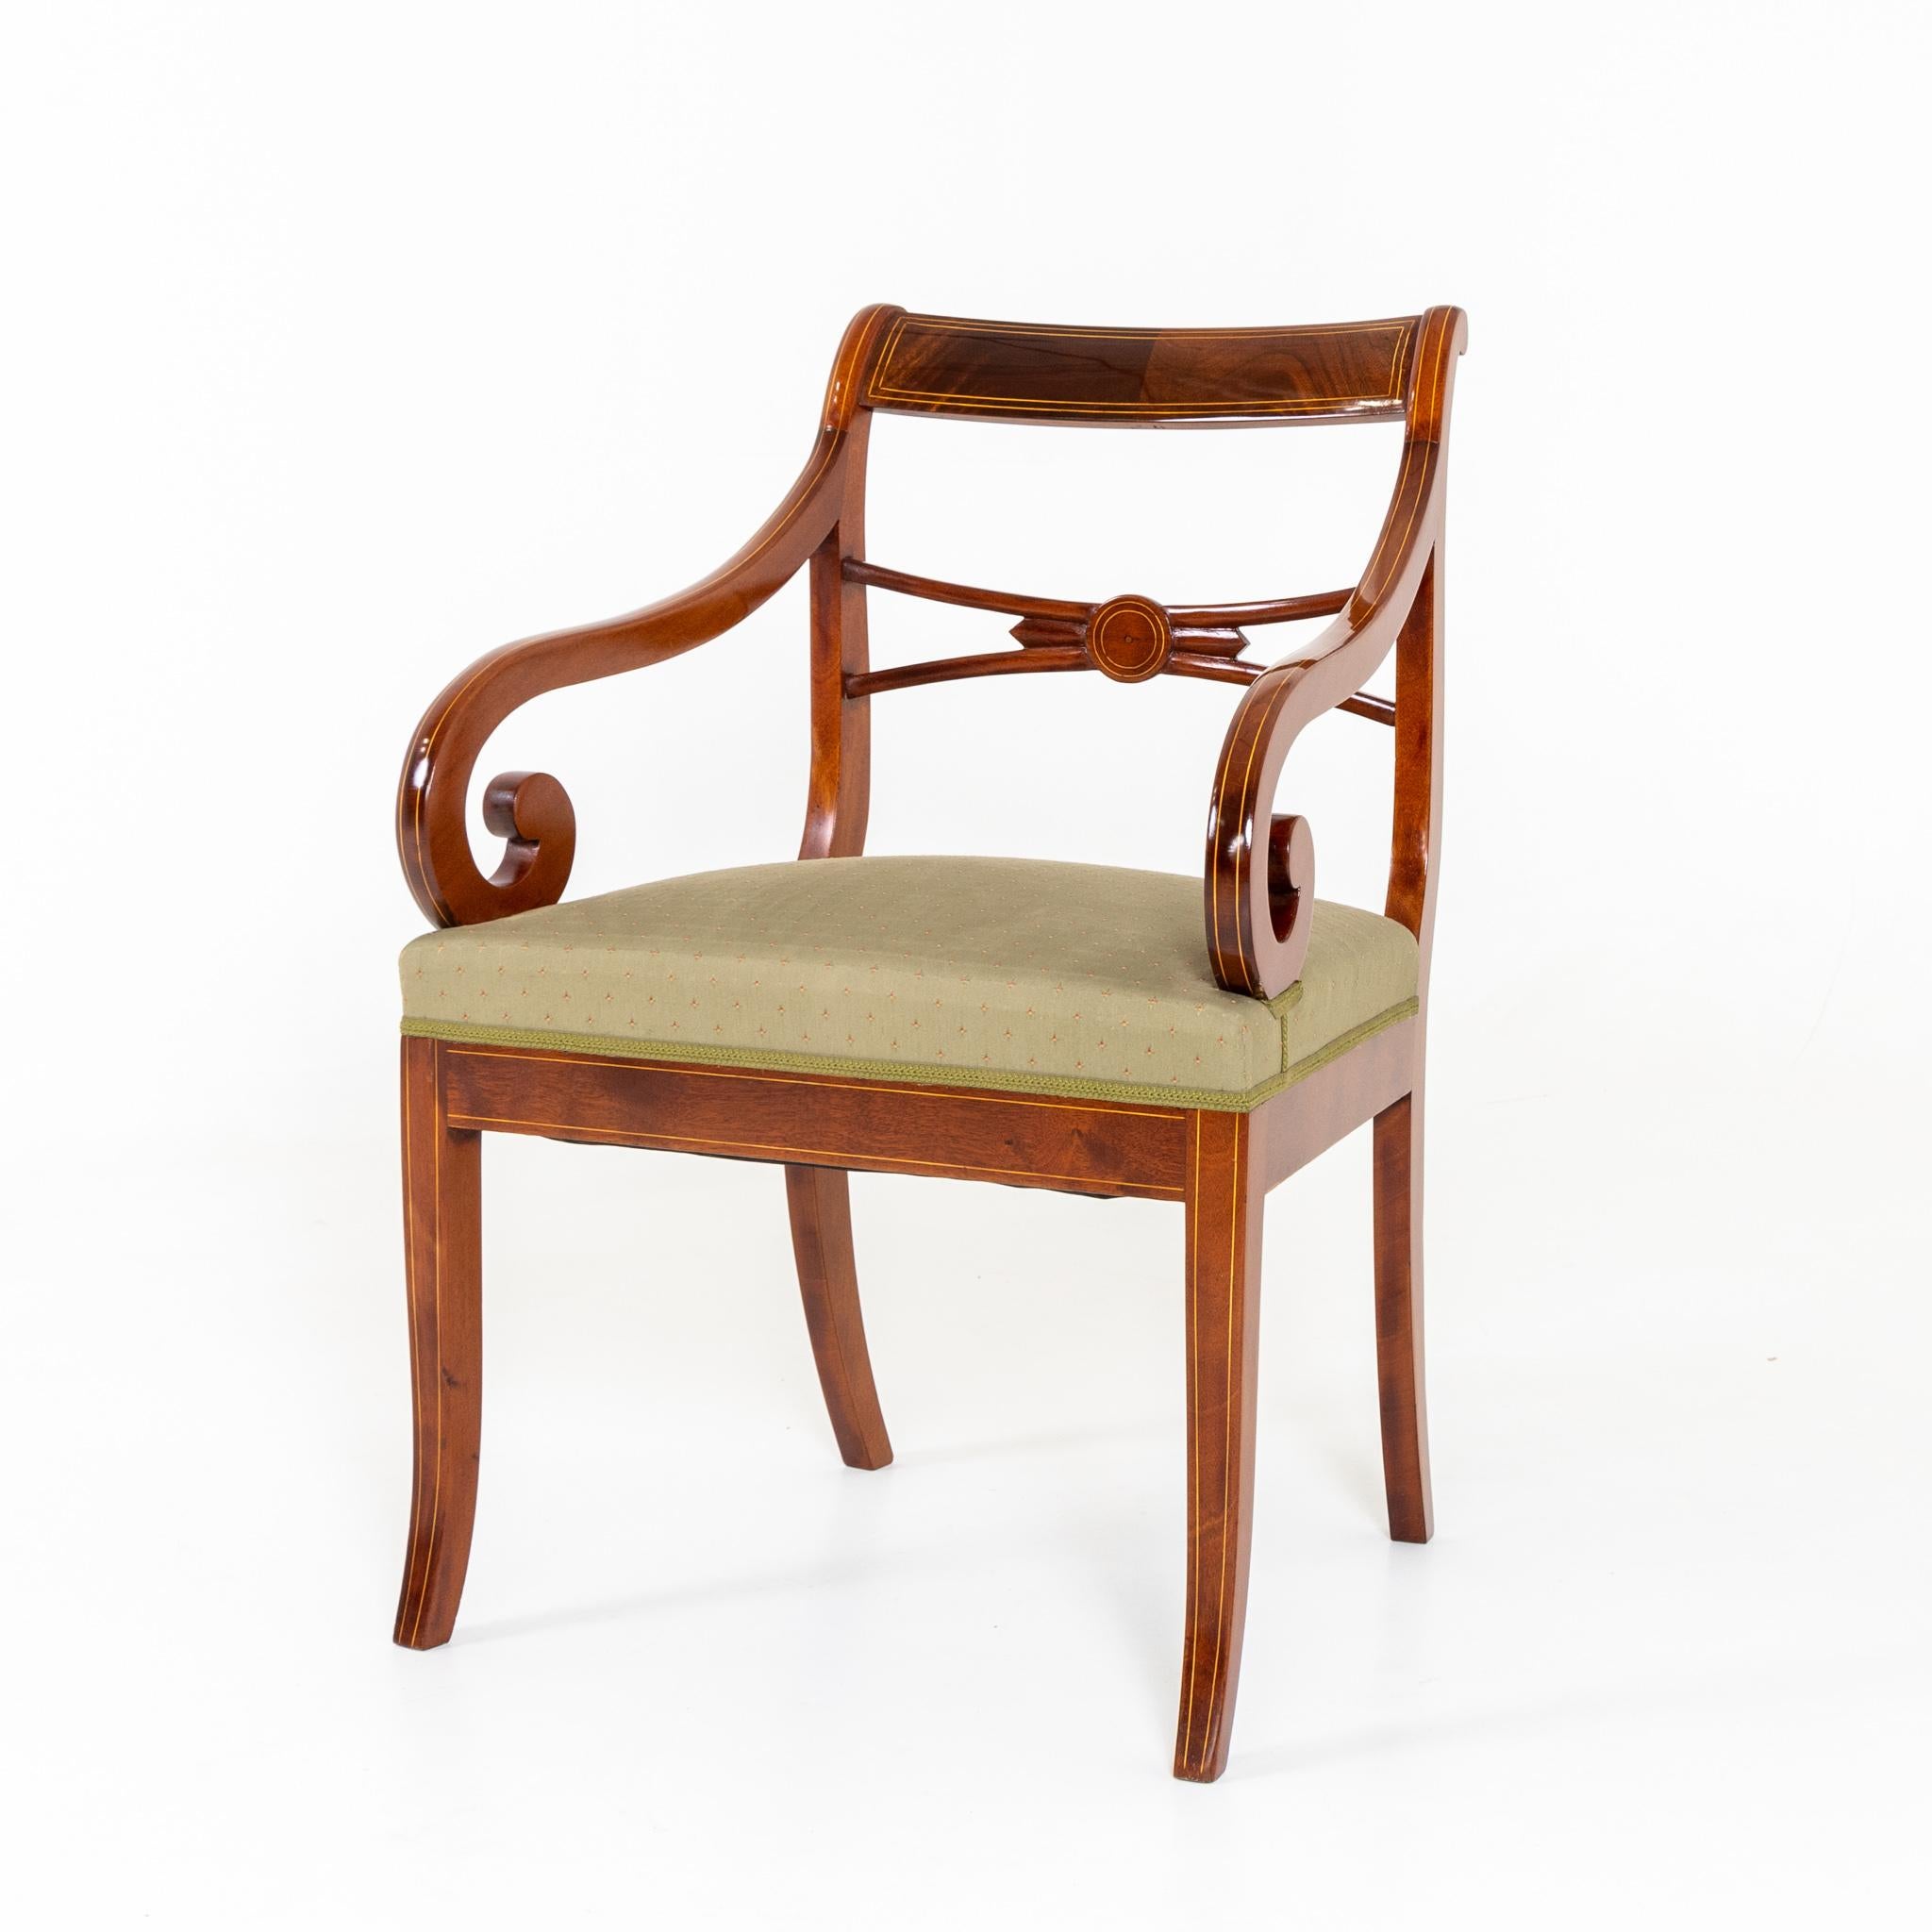 Mahagoni-Sessel mit feinen Fadeneinlagen und volutenförmigen Armlehnen, handpoliert.